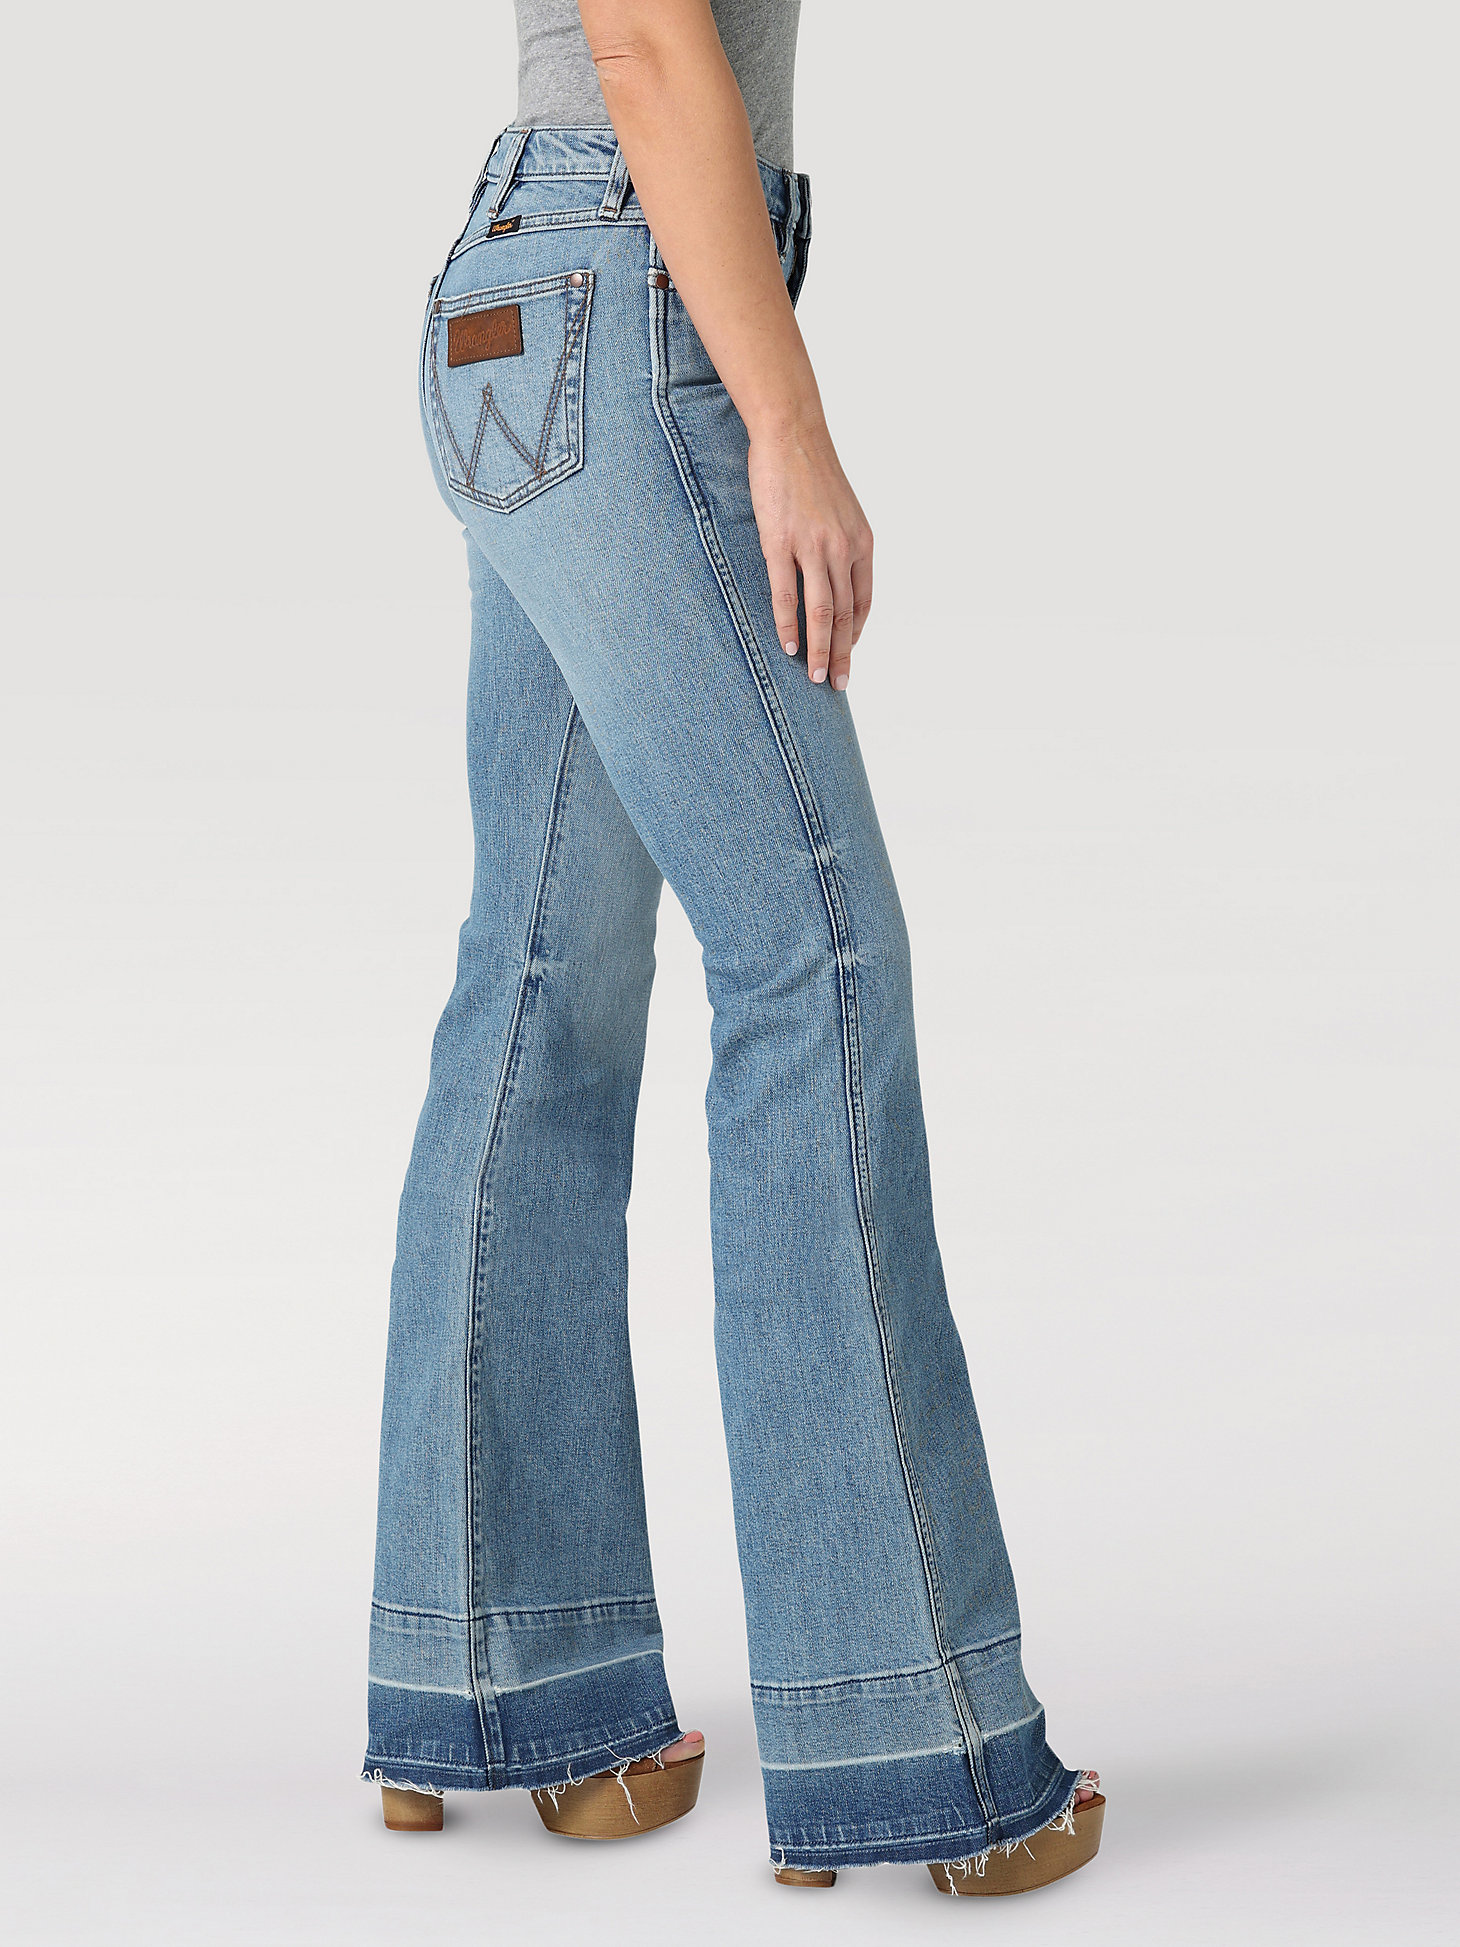 Women's Wrangler Retro Premium High Rise Released Hem Trouser Jean in Wilma alternative view 6